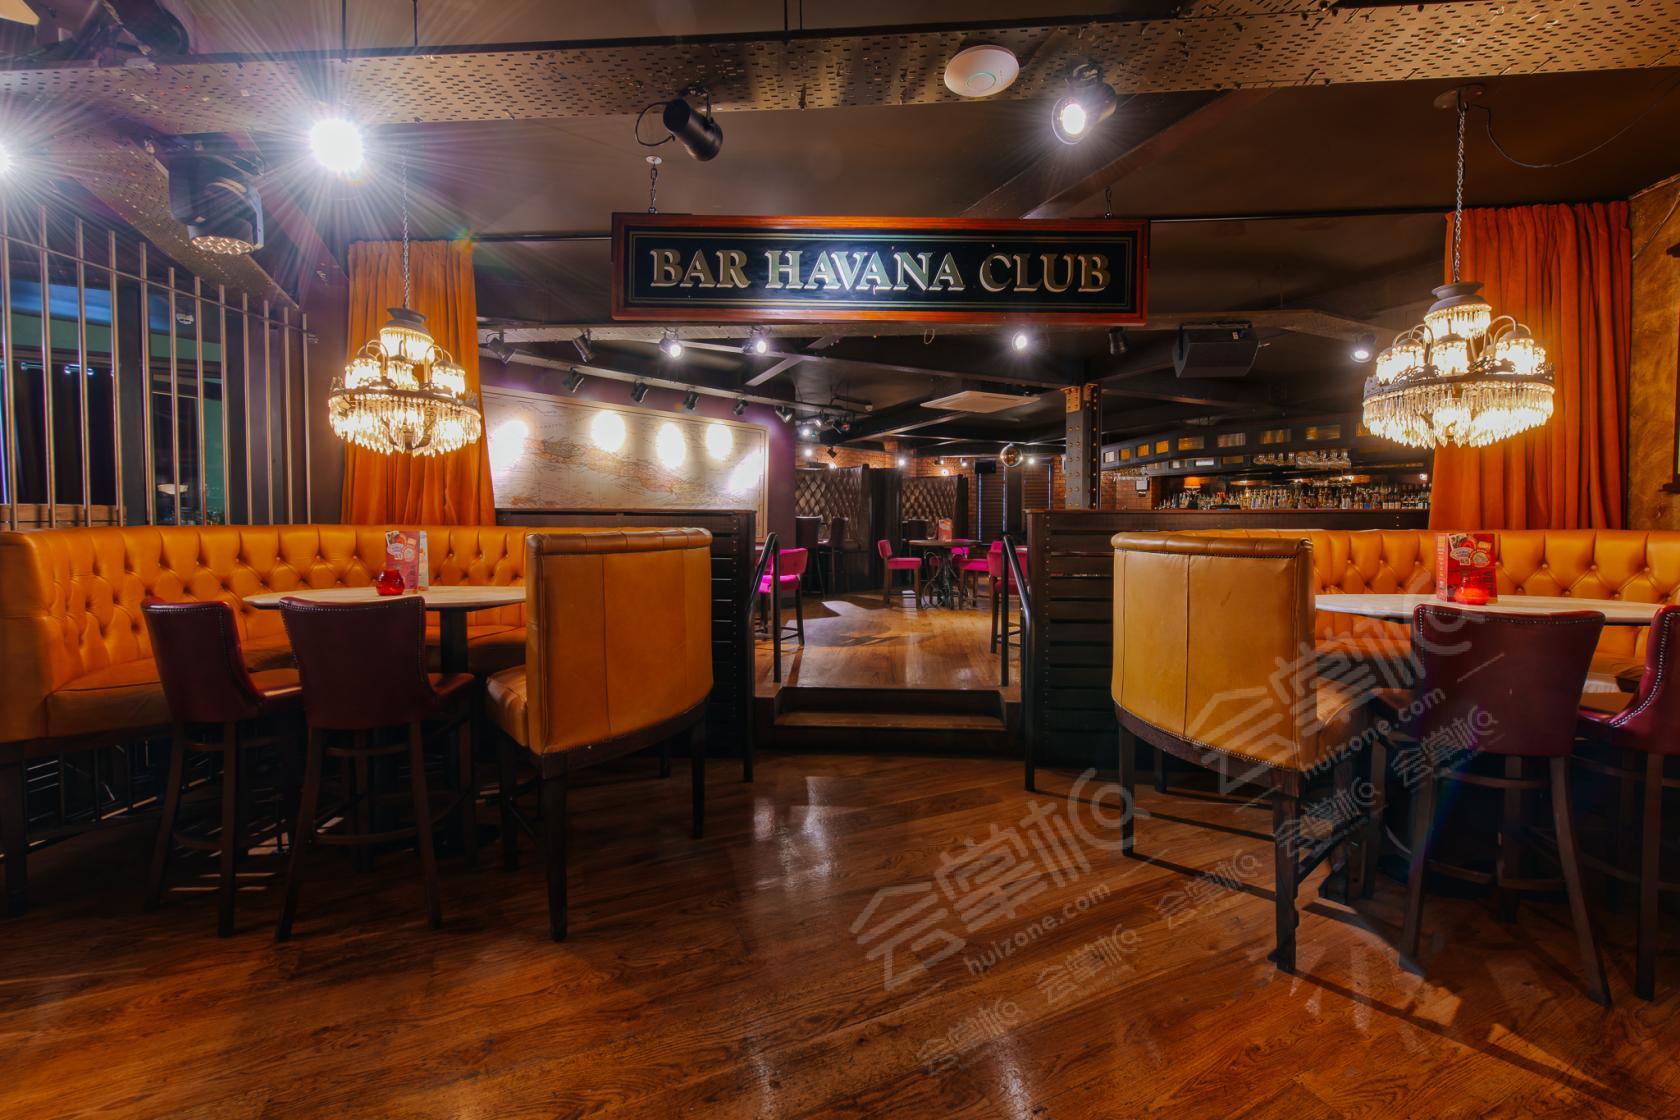 Havana Bar